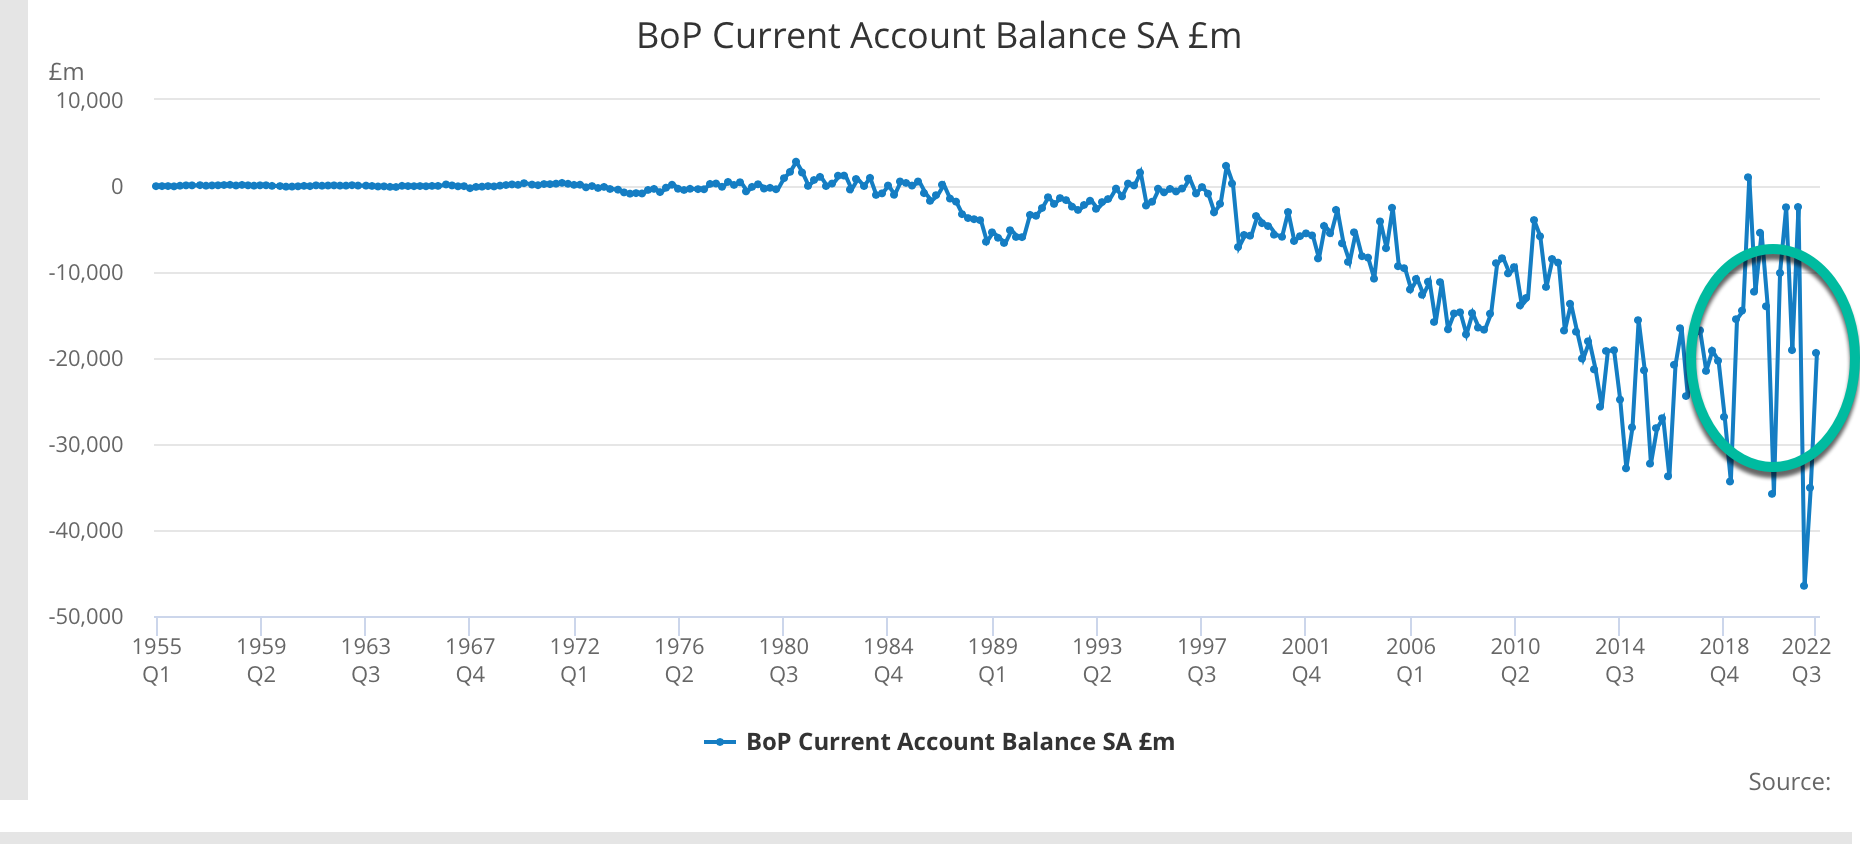 UK current account improvement